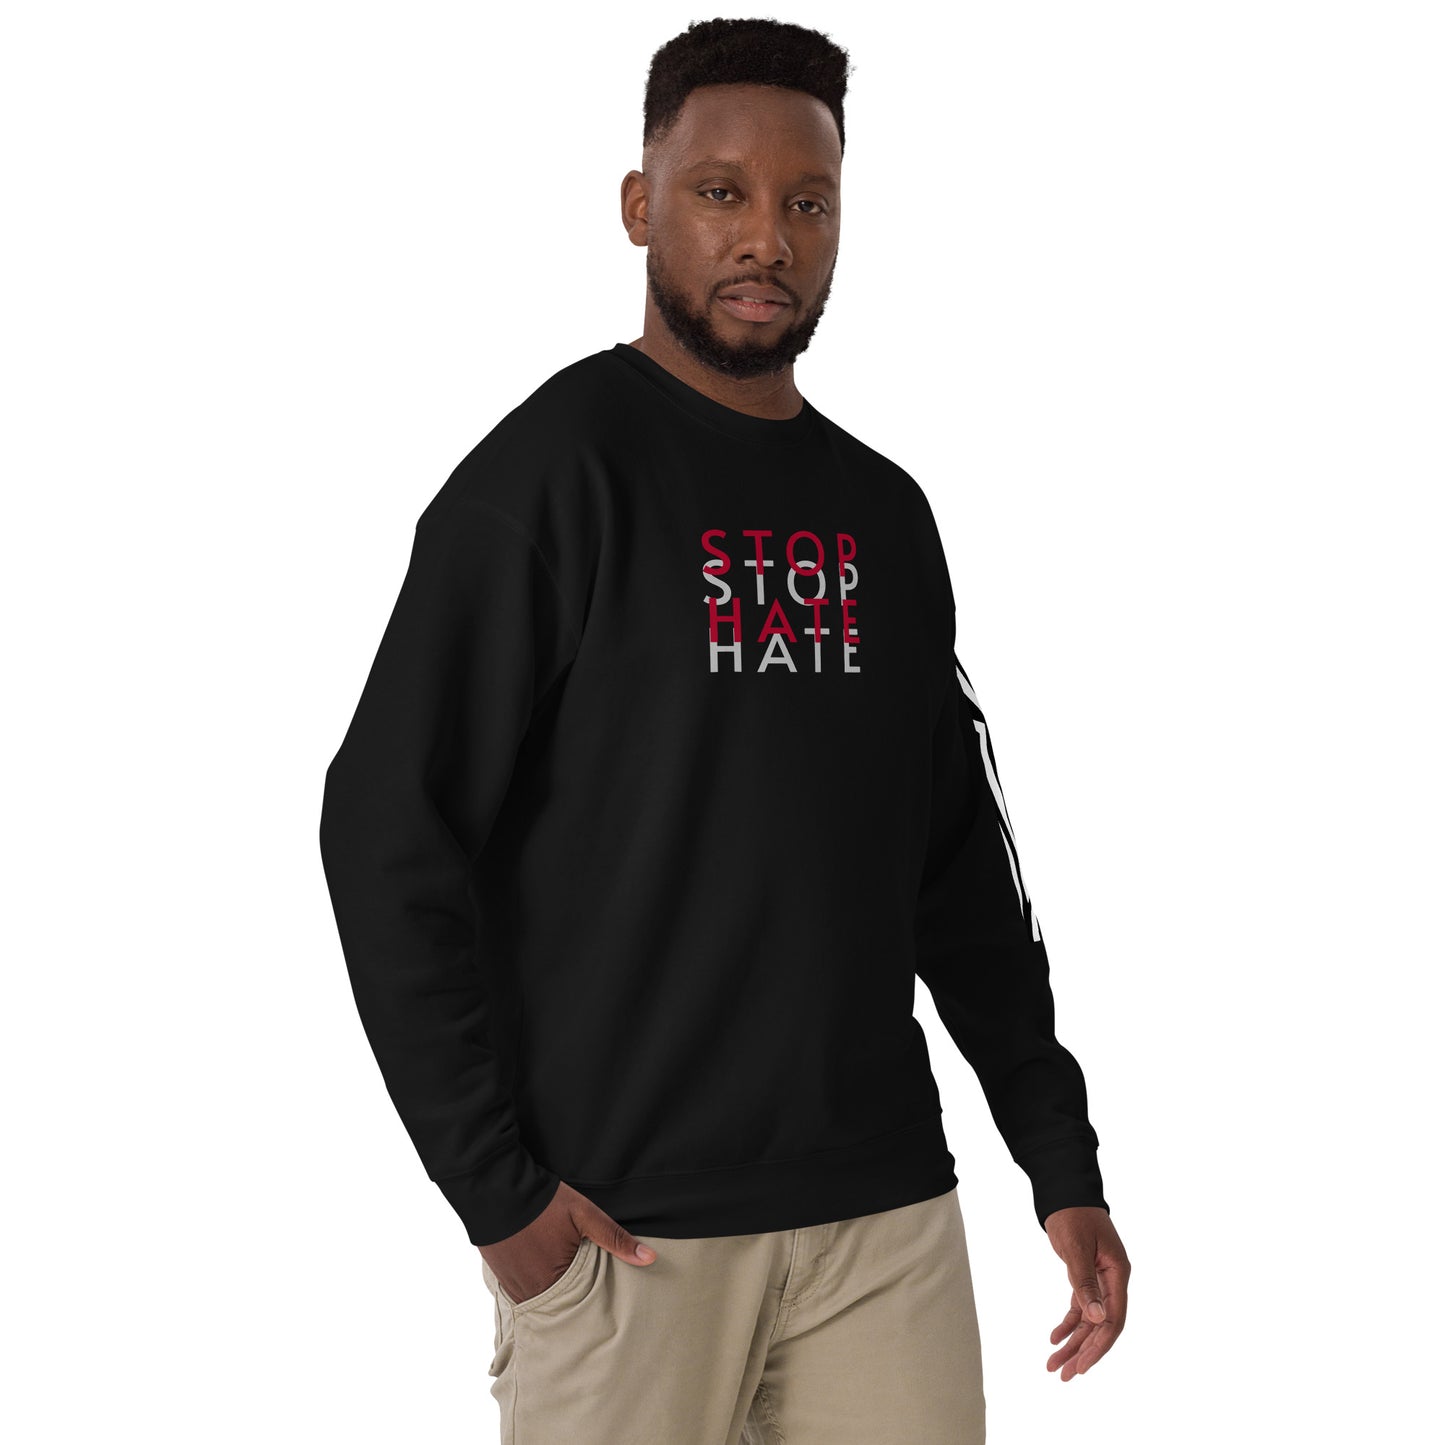 STOP HATE Unisex Premium Sweatshirt